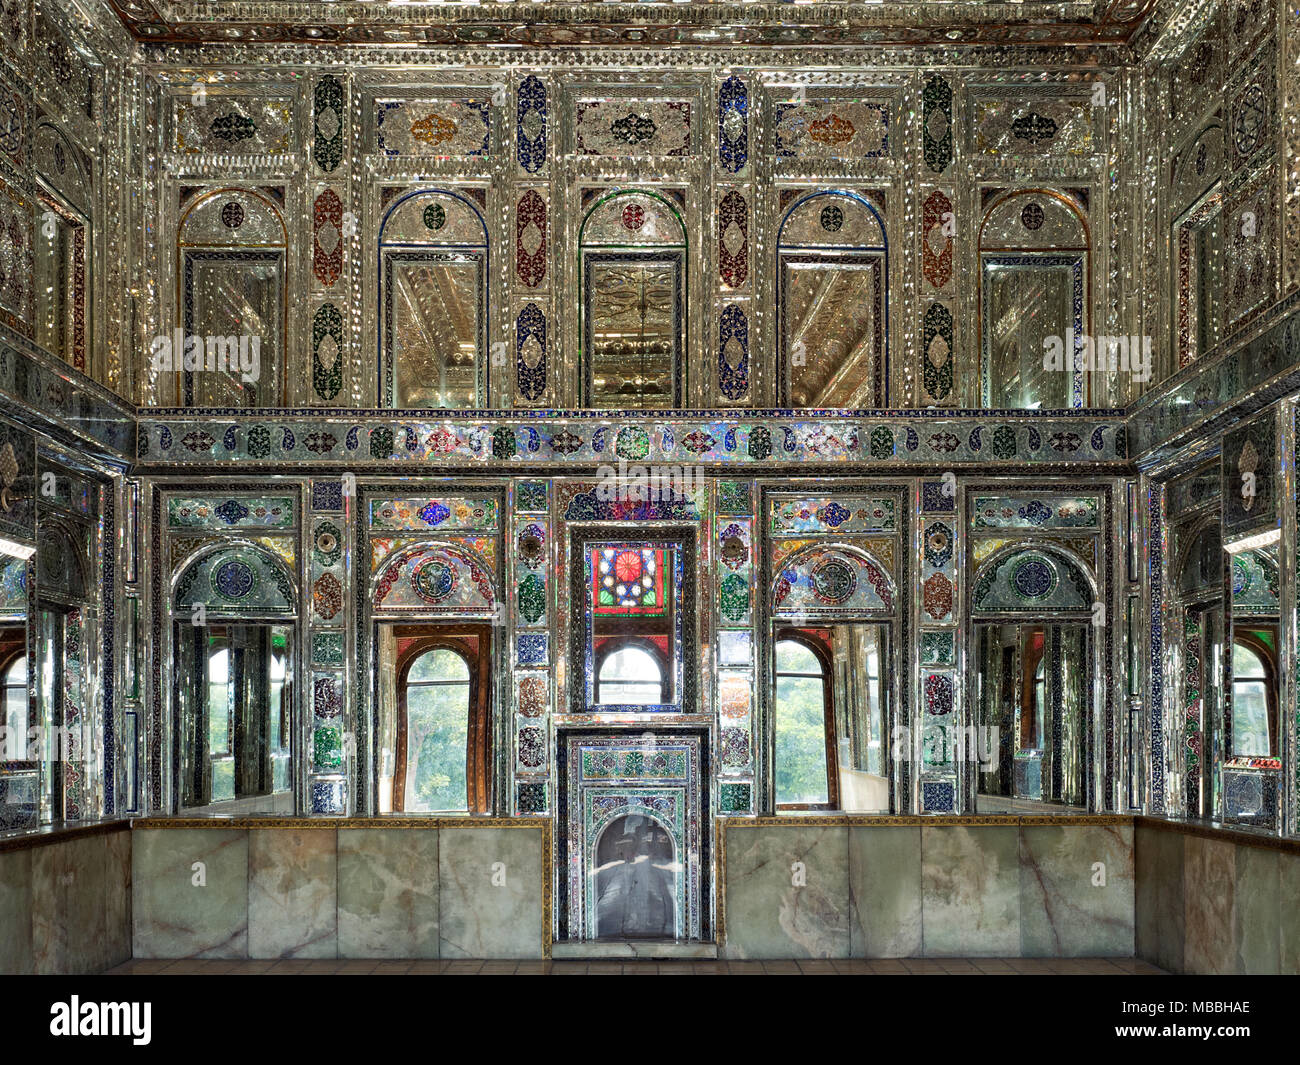 Qavam storica casa interno, Shiraz, Iran Foto Stock